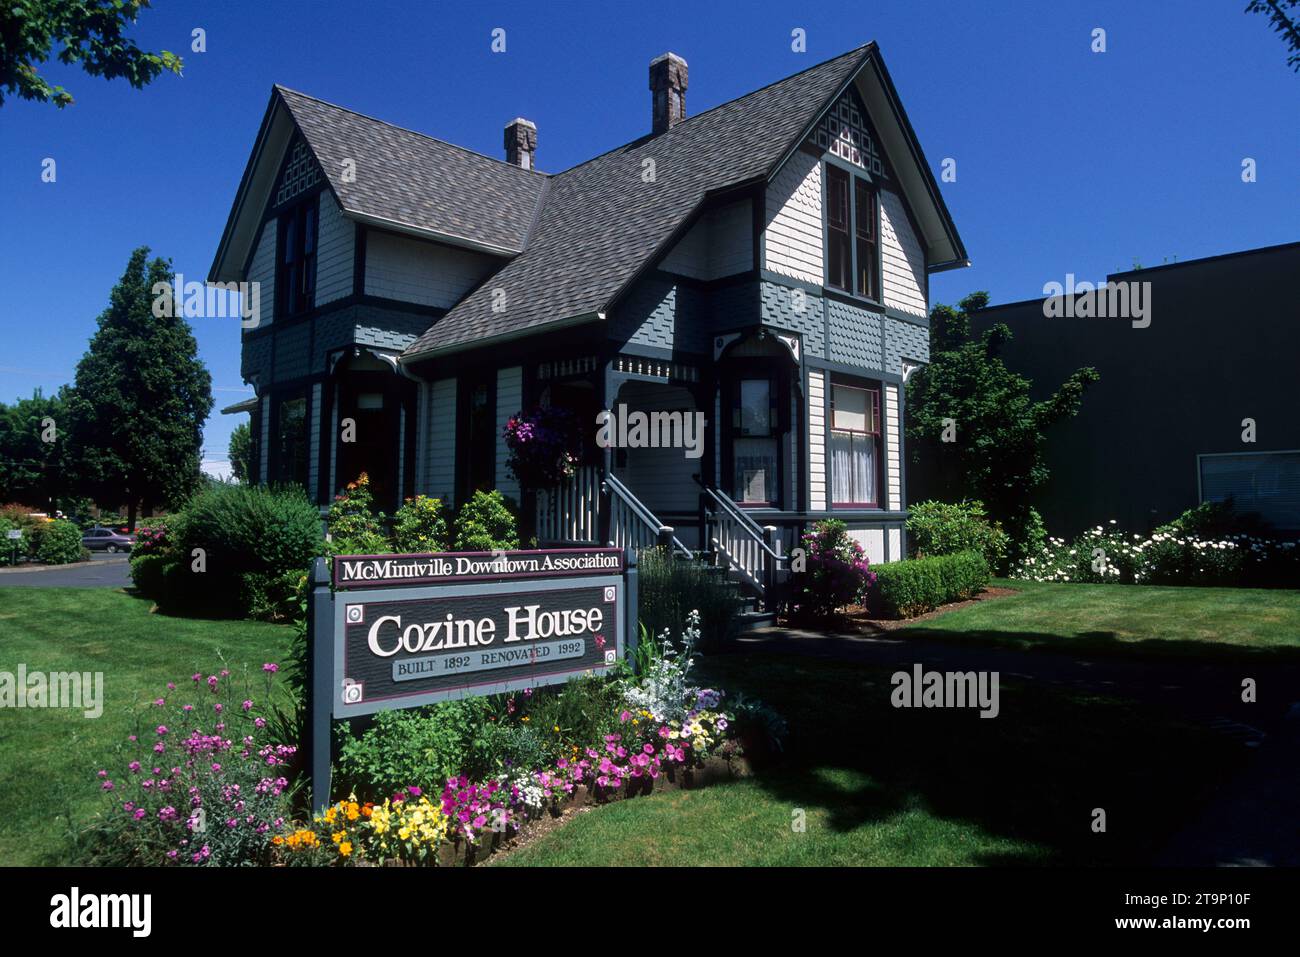 Cozine House, McMinnville, Oregon Stock Photo